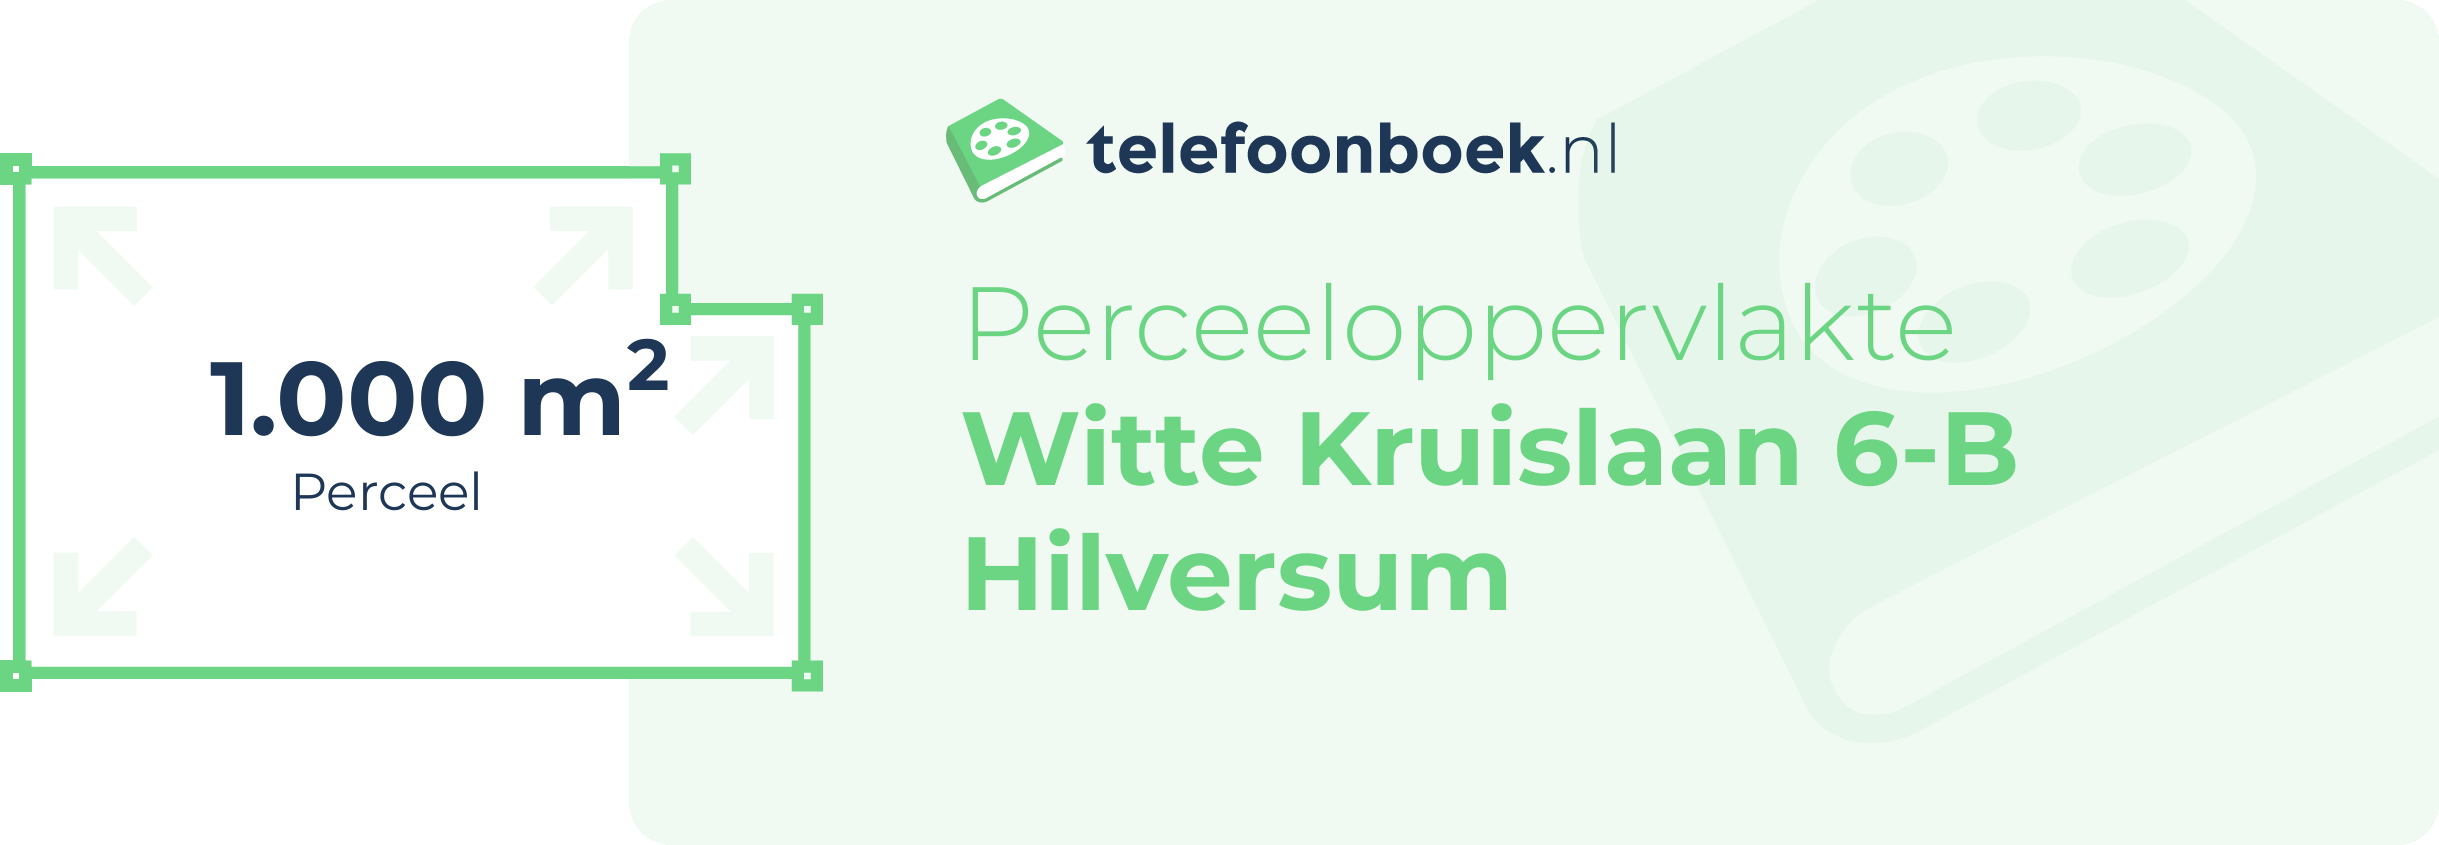 Perceeloppervlakte Witte Kruislaan 6-B Hilversum